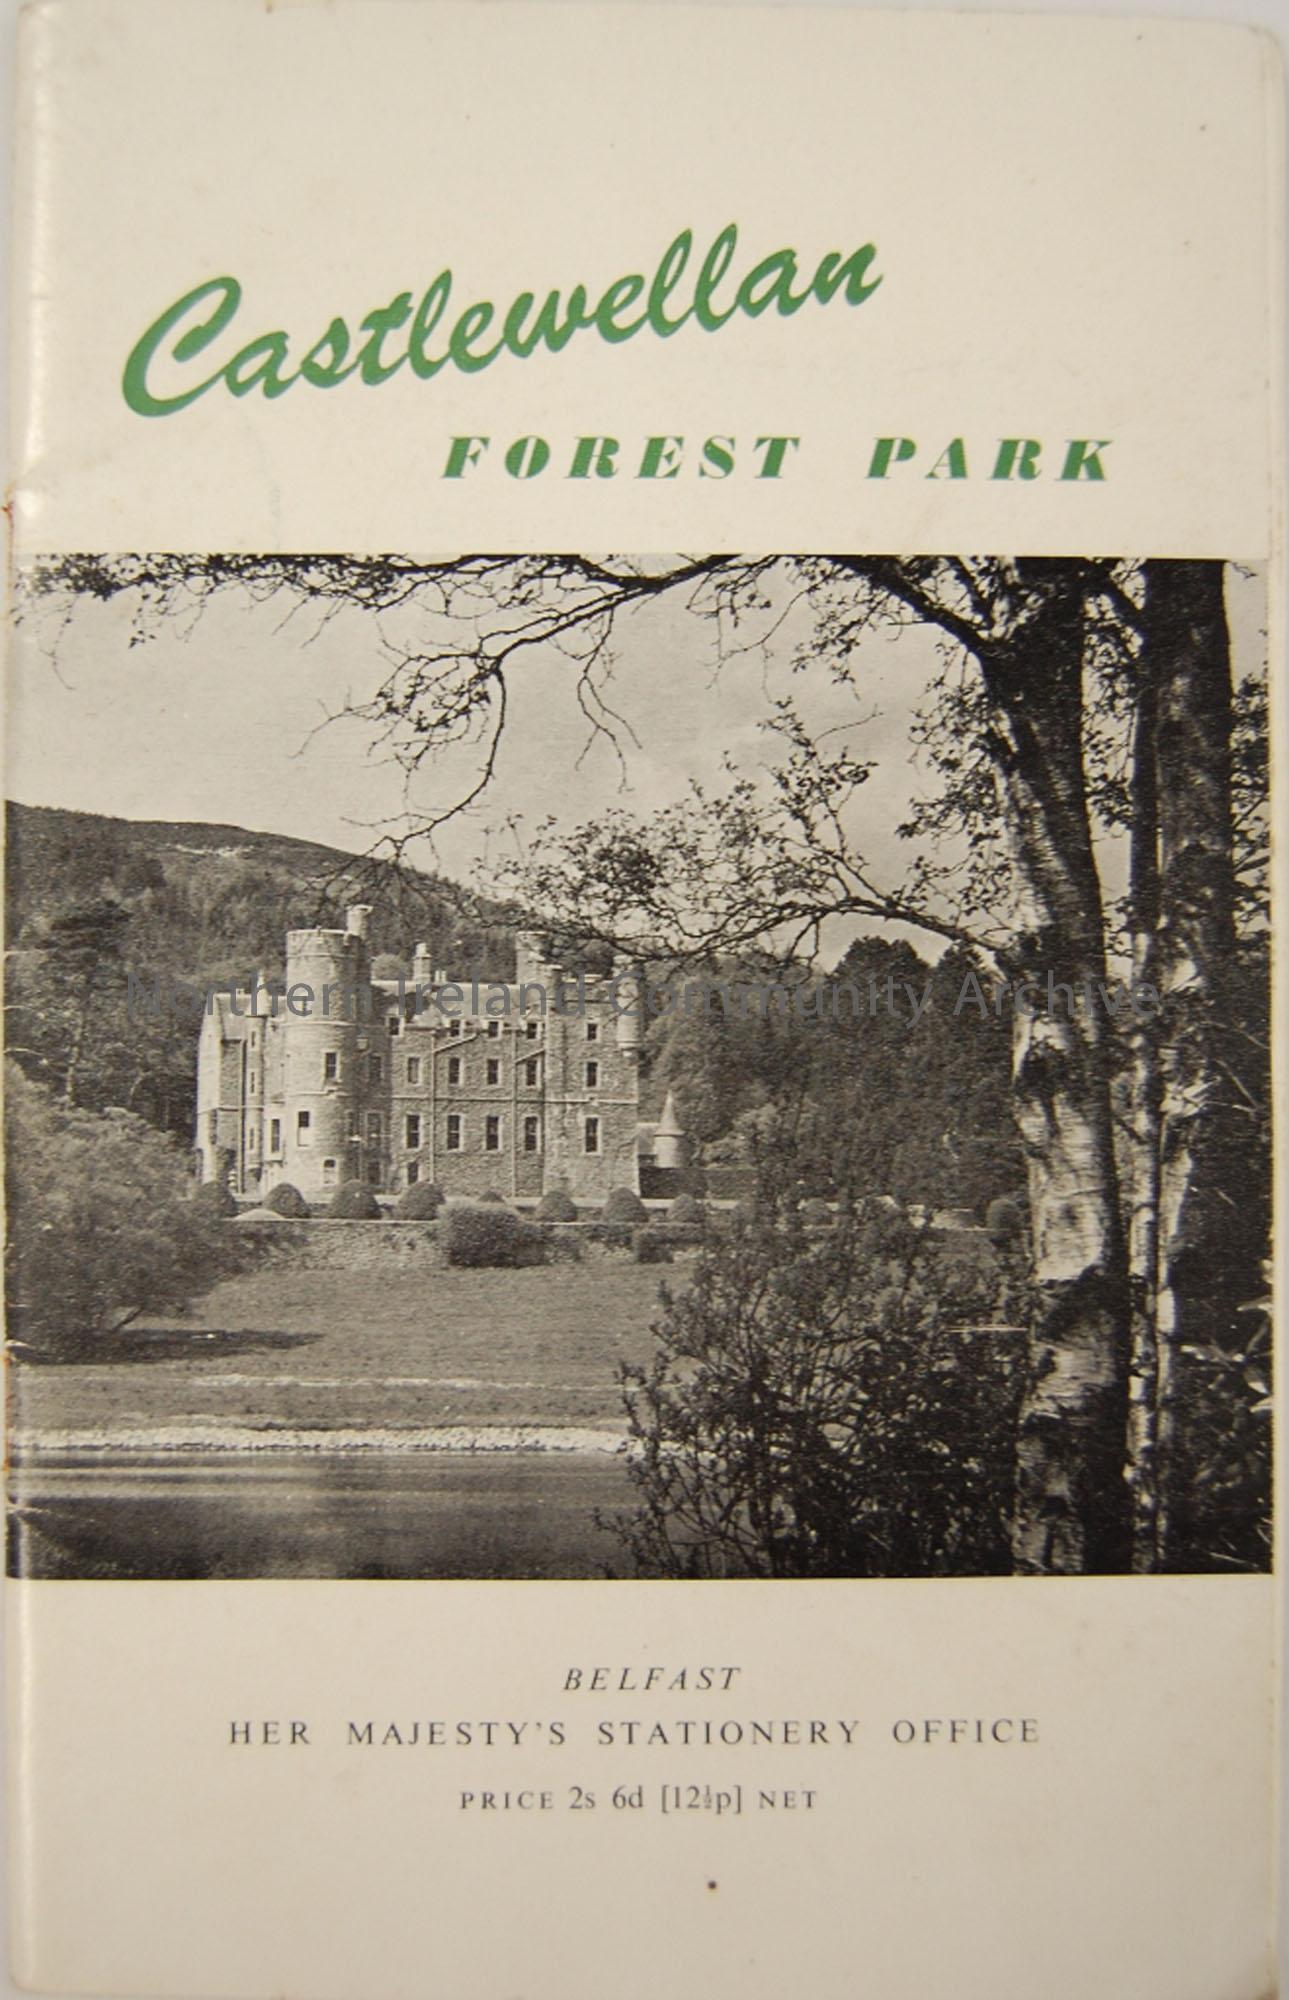 Castlewellan forest park. Price 2s 6d